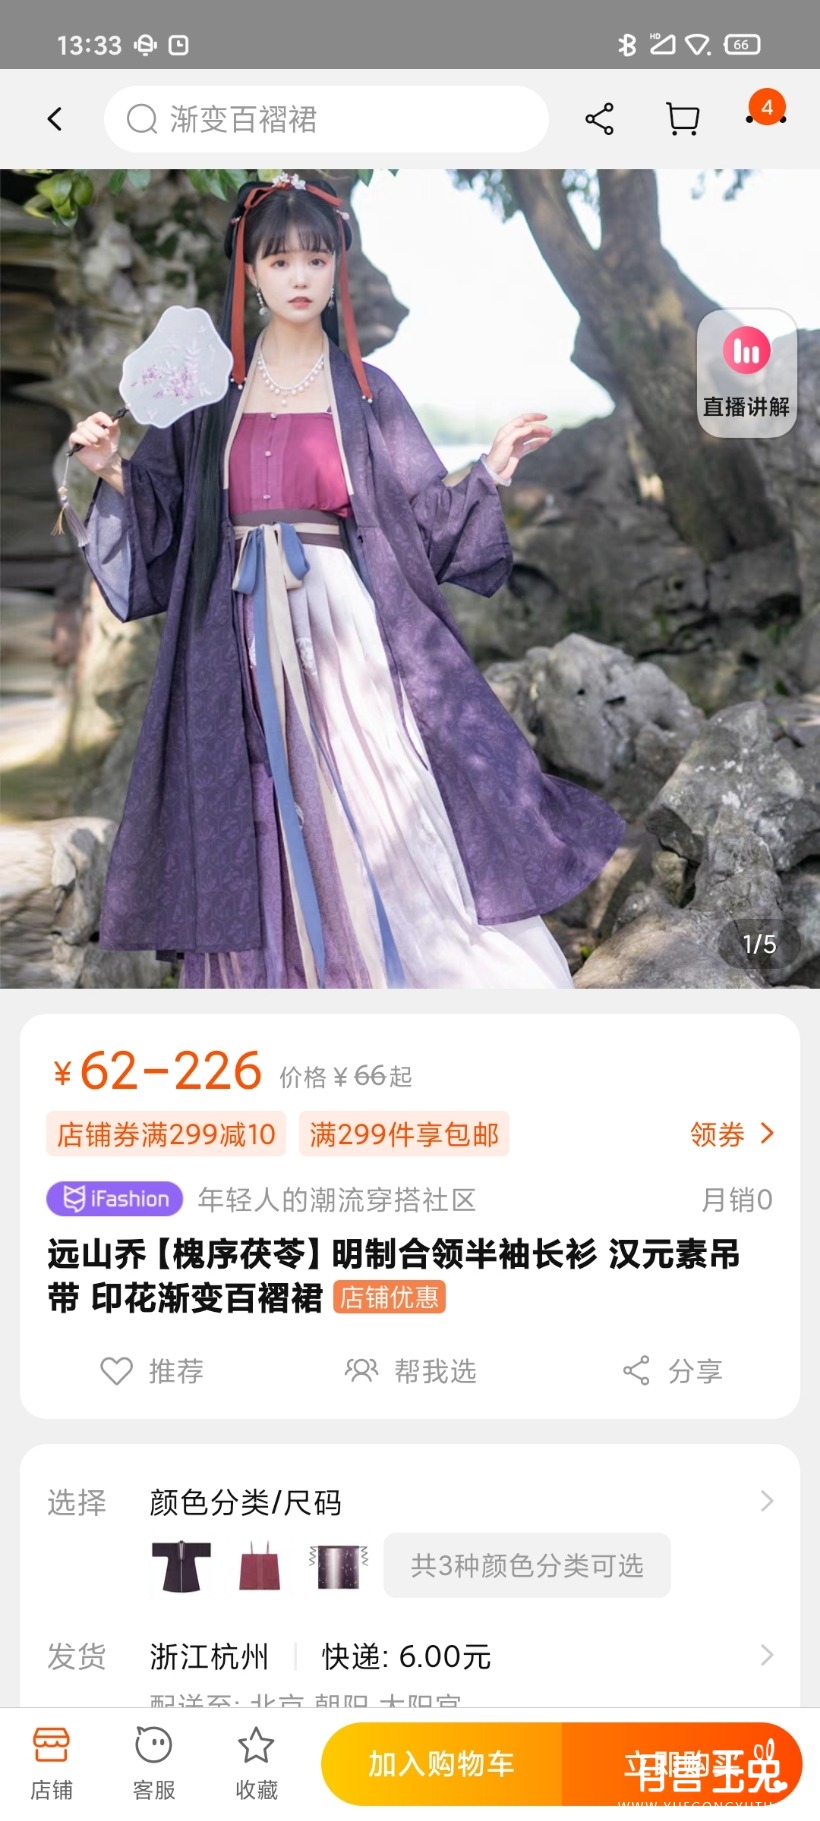 Screenshot_2021-03-31-13-33-07-394_com.taobao.taobao.jpg